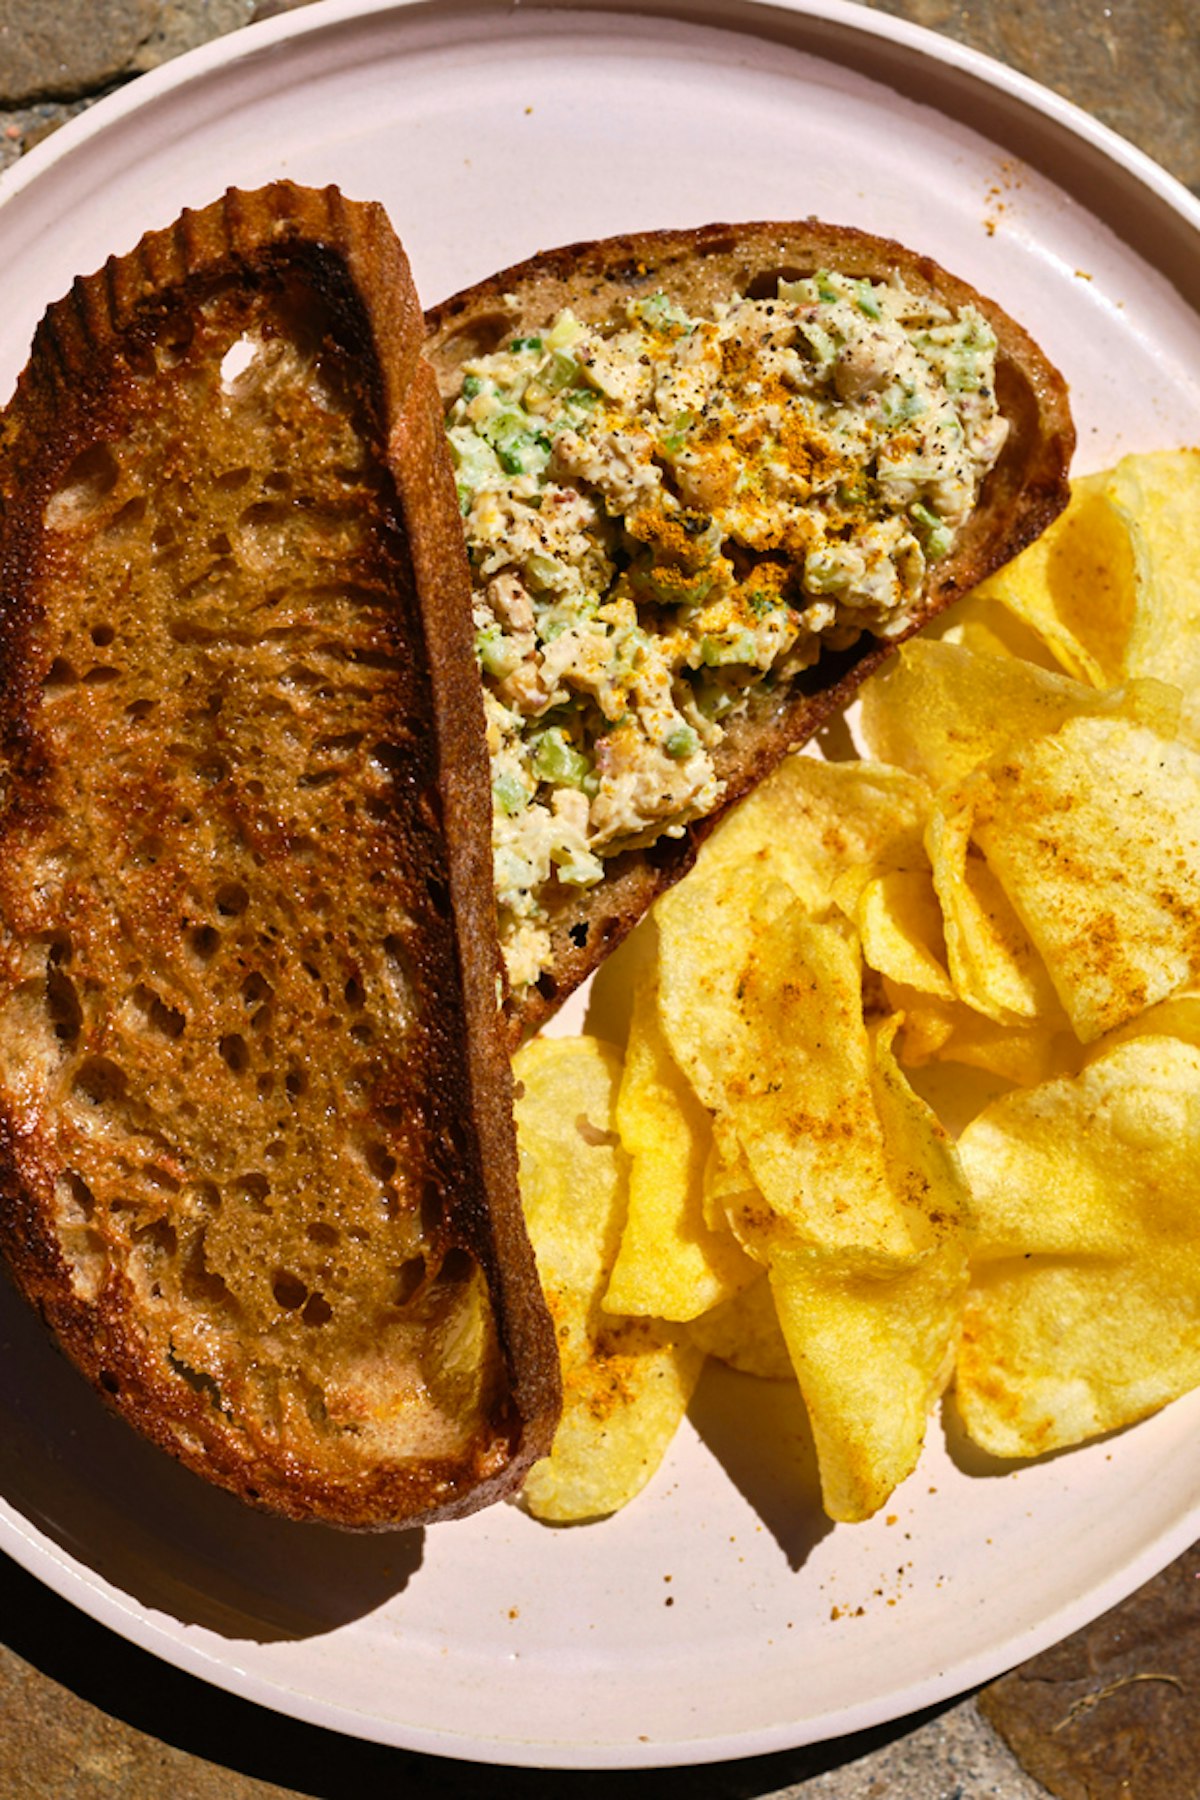 Eggy” Chickpea Salad Sandwiches Recipe - The Washington Post